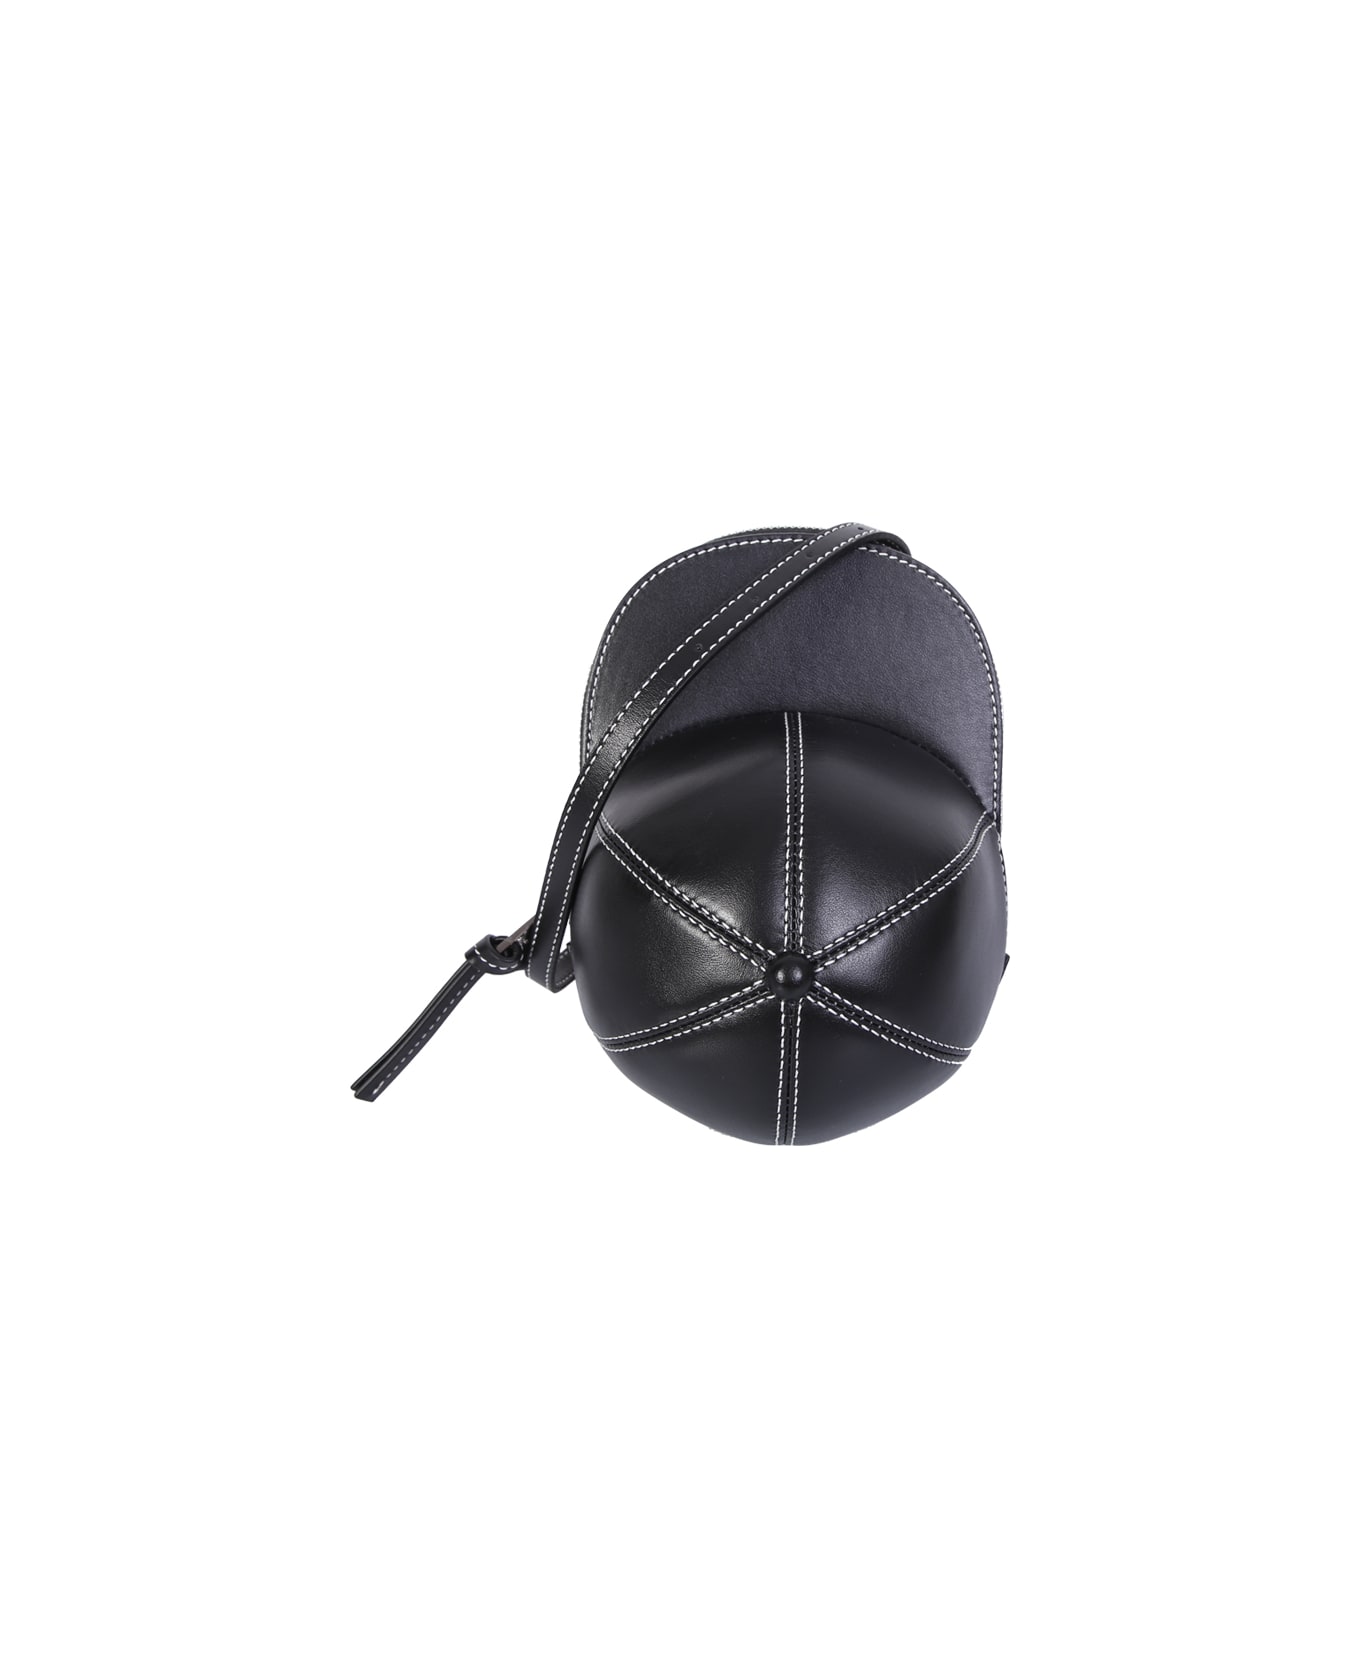 J.W. Anderson Black Cap Midi Bag - Black バッグ